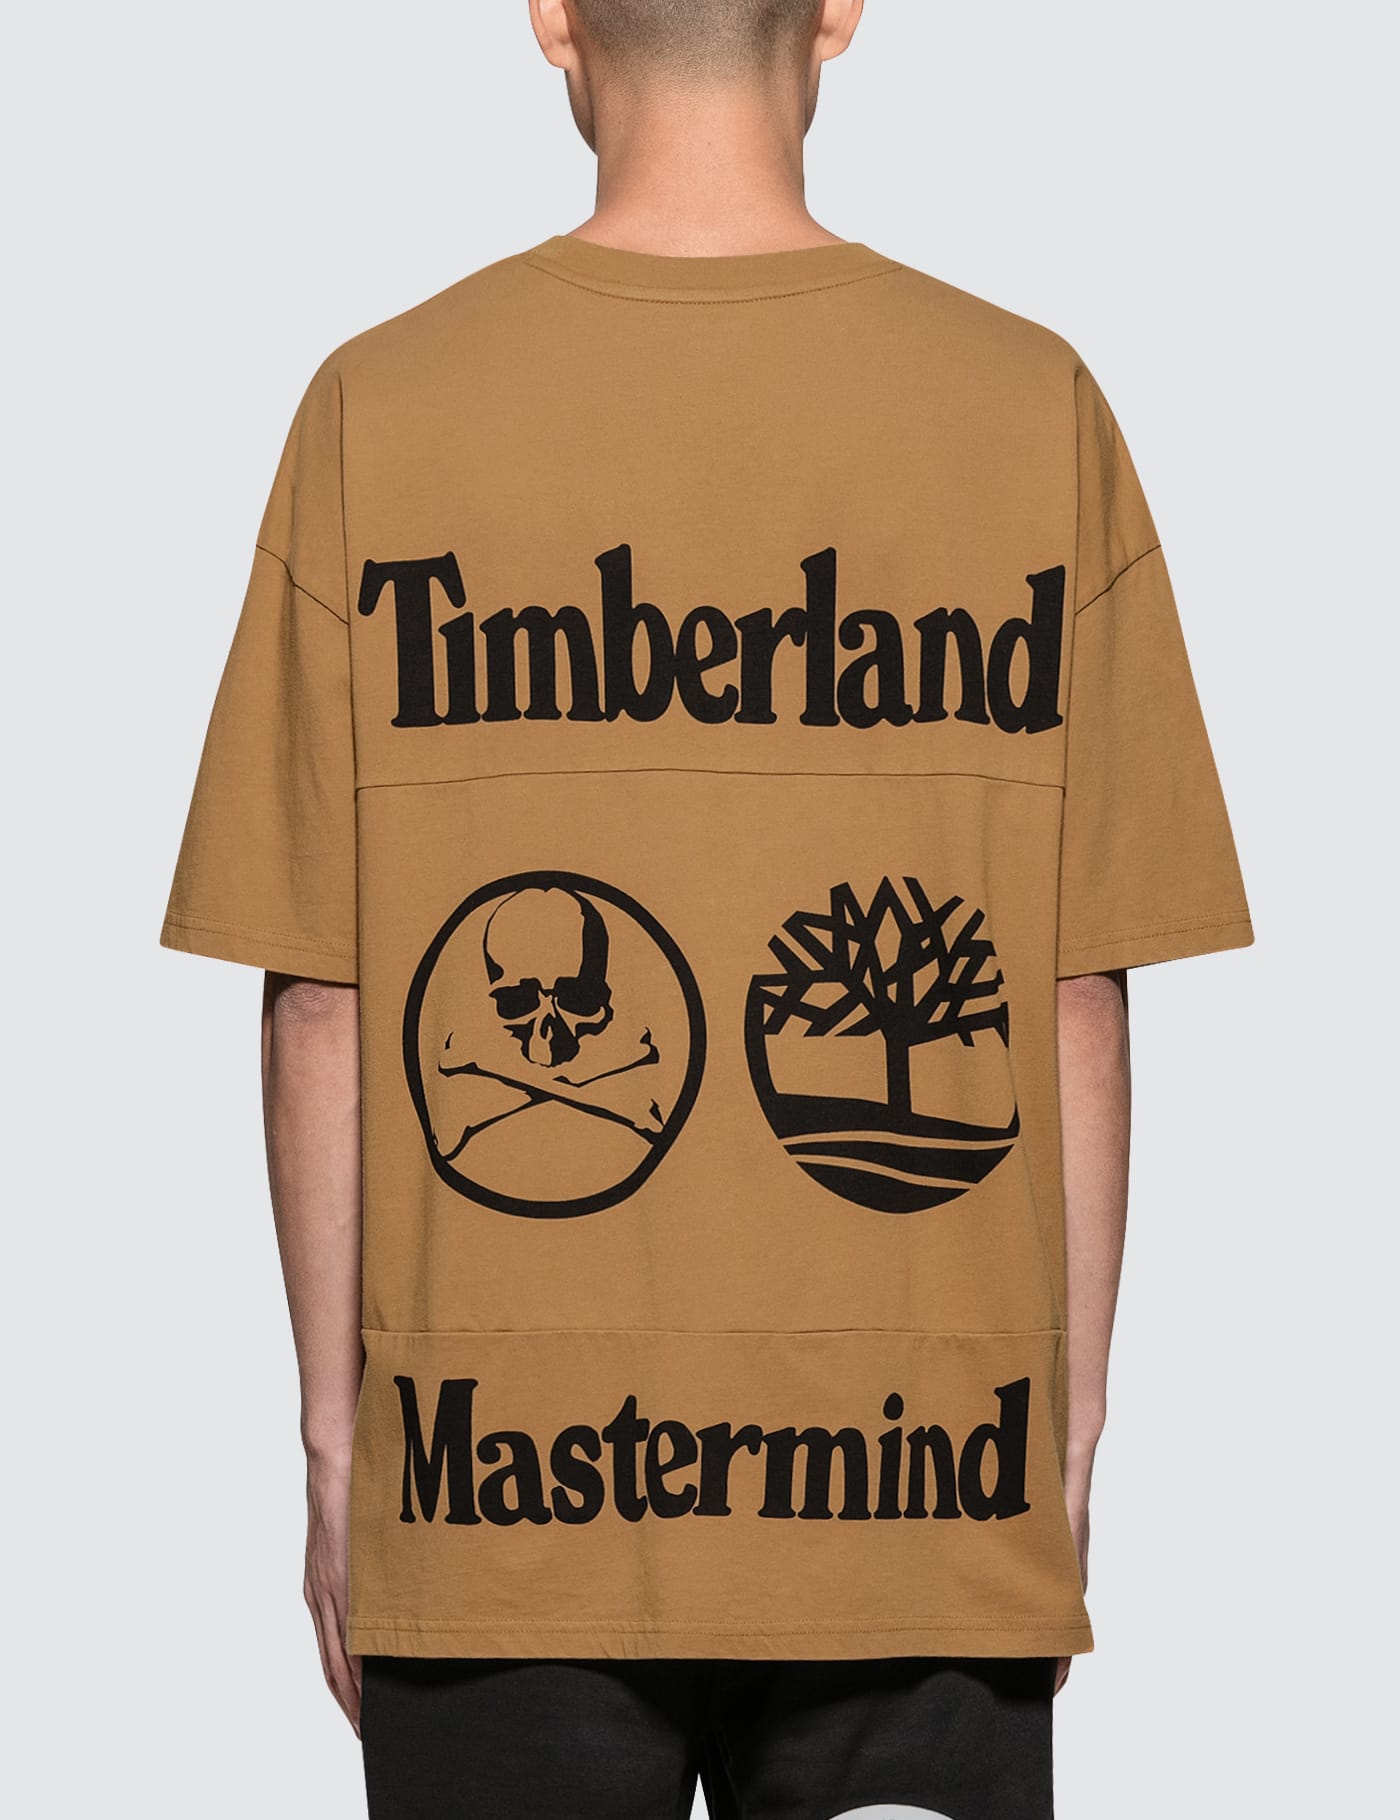 timberland mastermind shirt